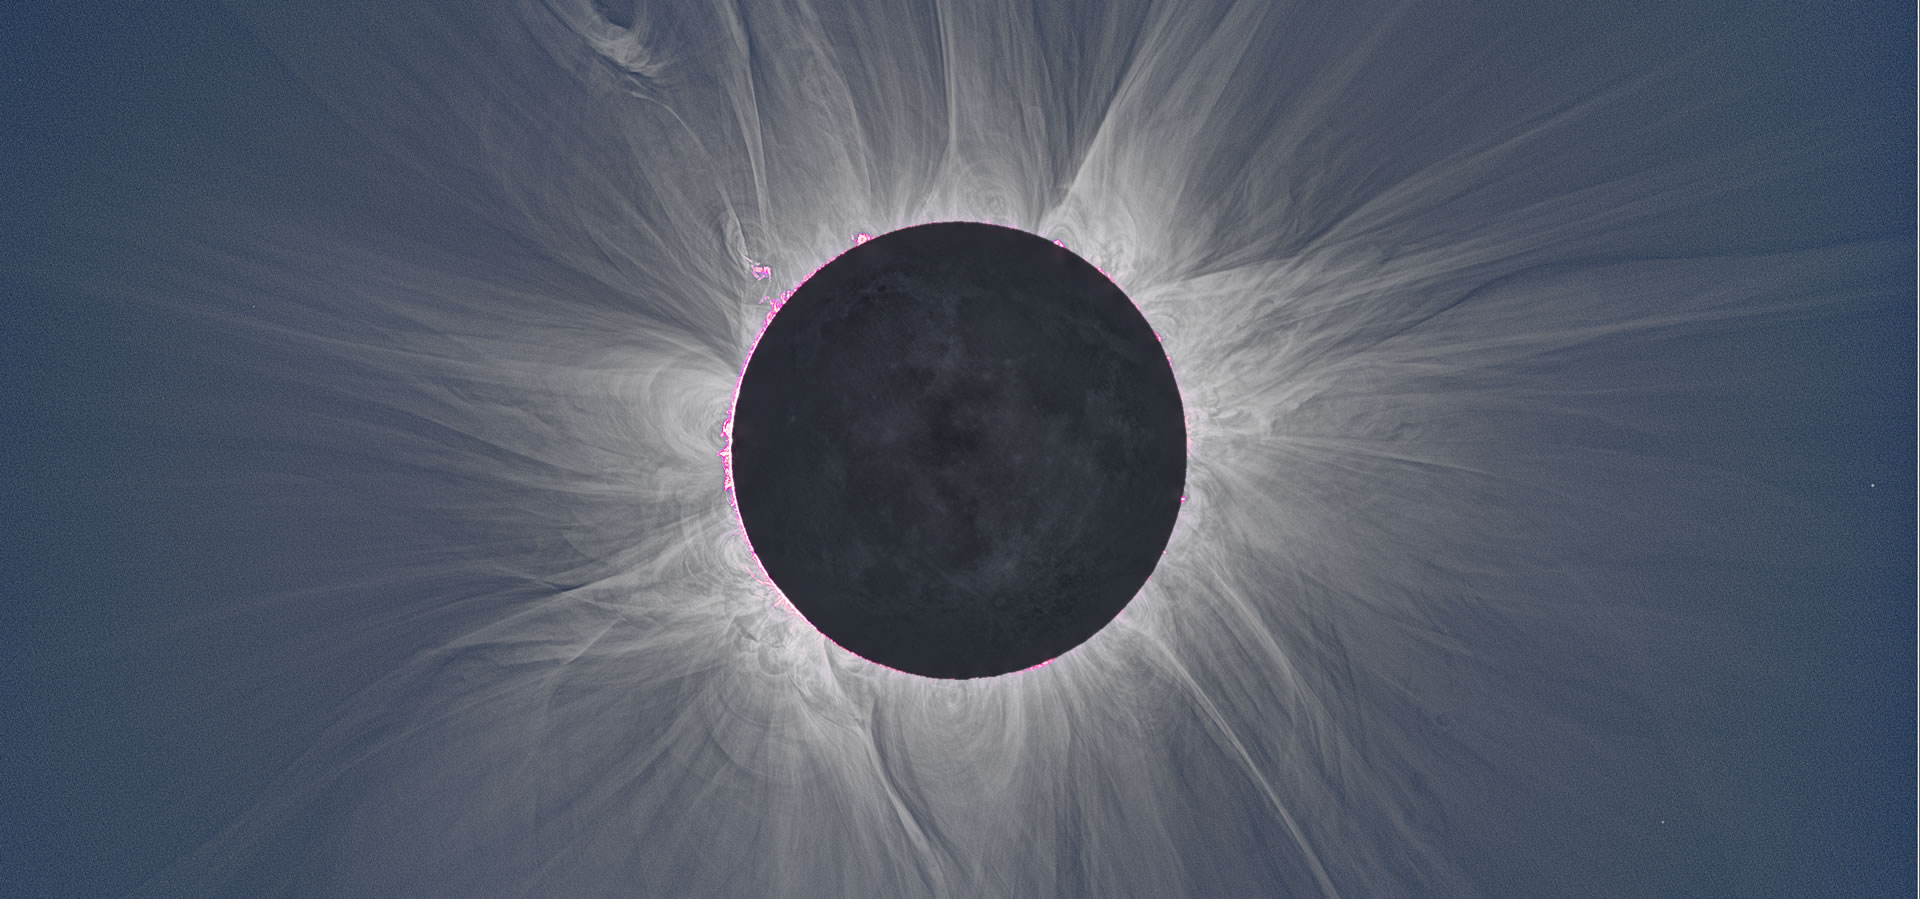 Sun during eclipse, showing corona